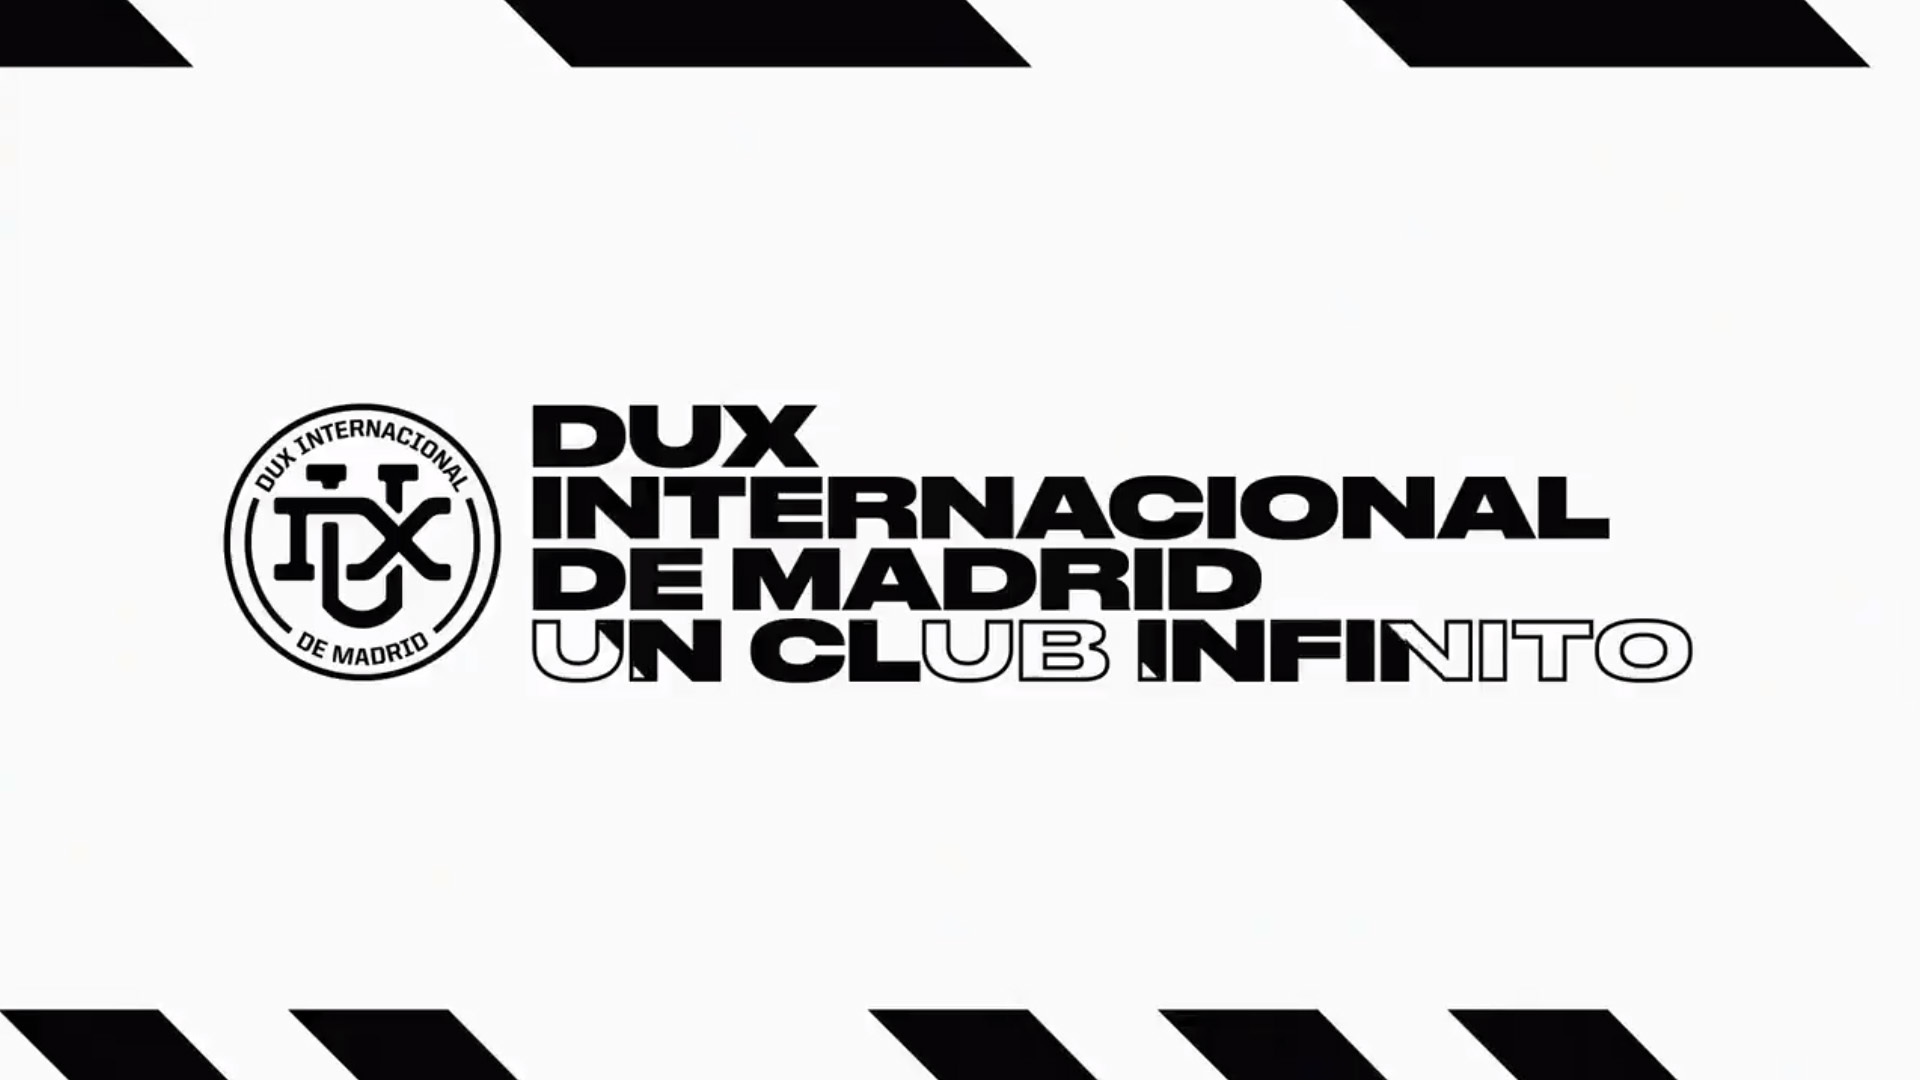 Dux Internacional de Madrid